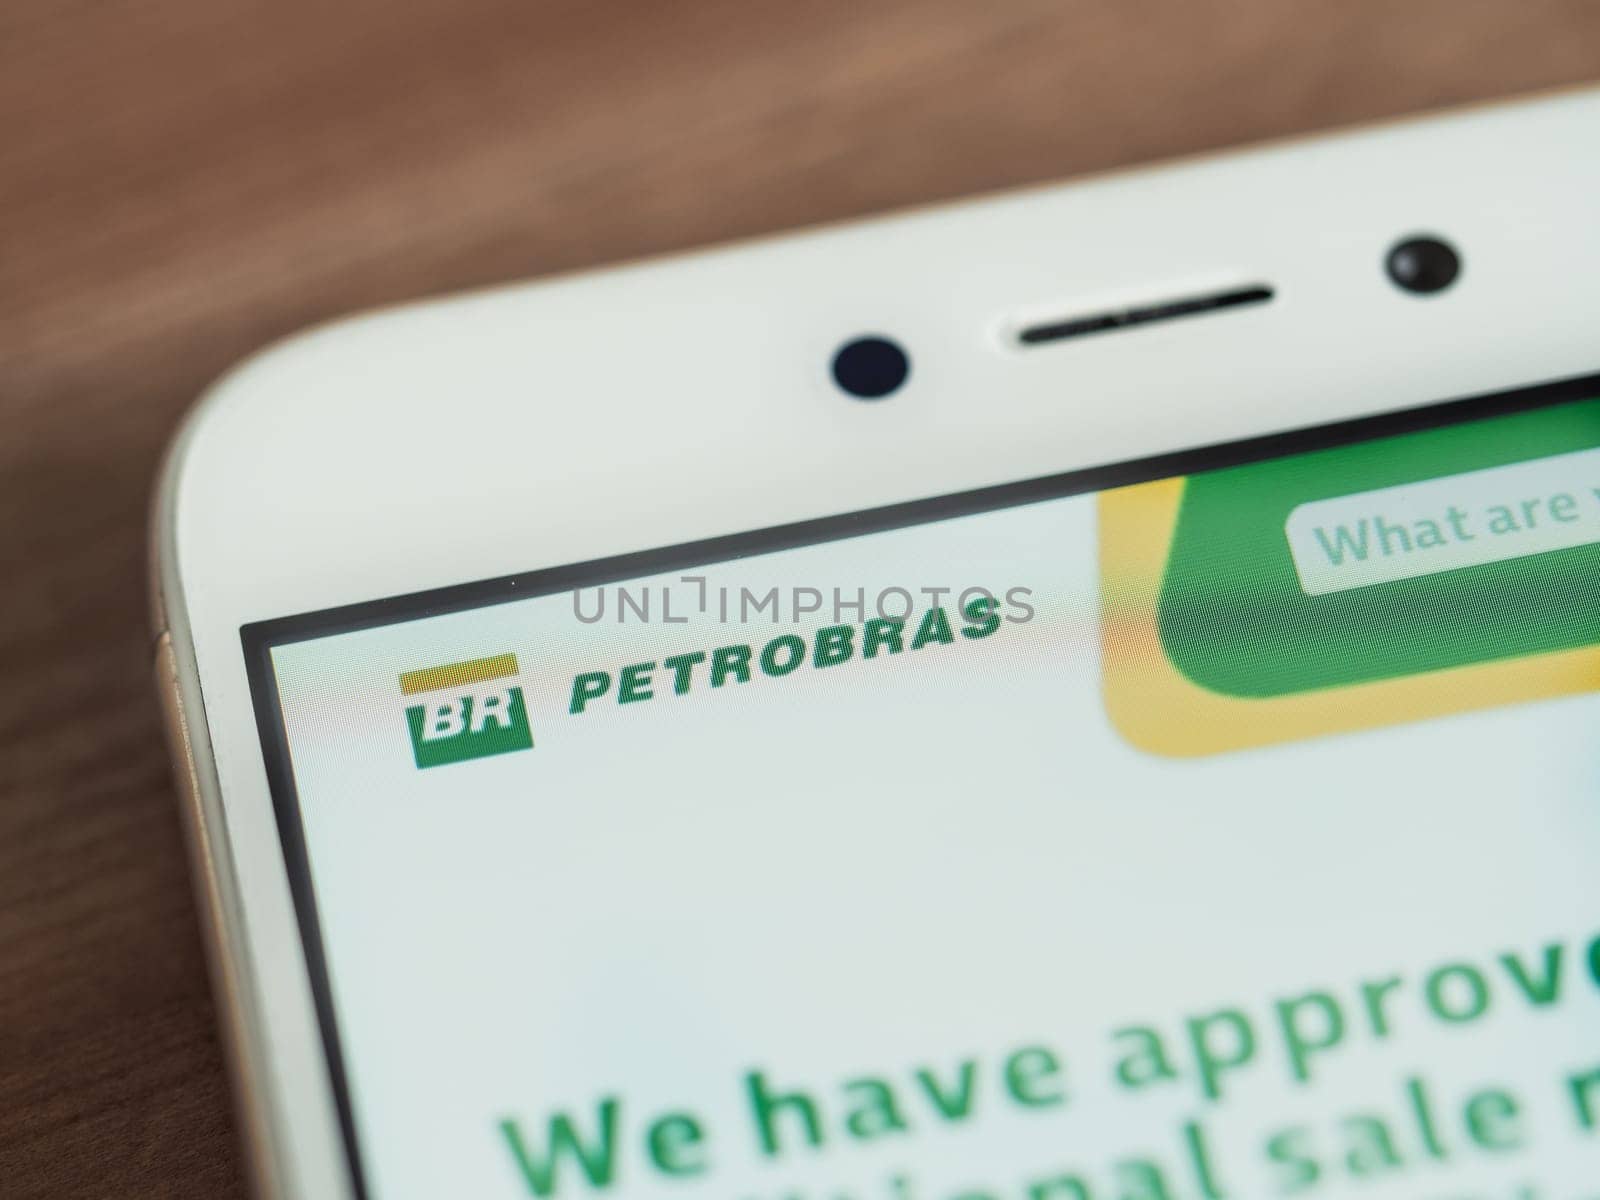 Petrobras logo on smartphone screen by fascinadora